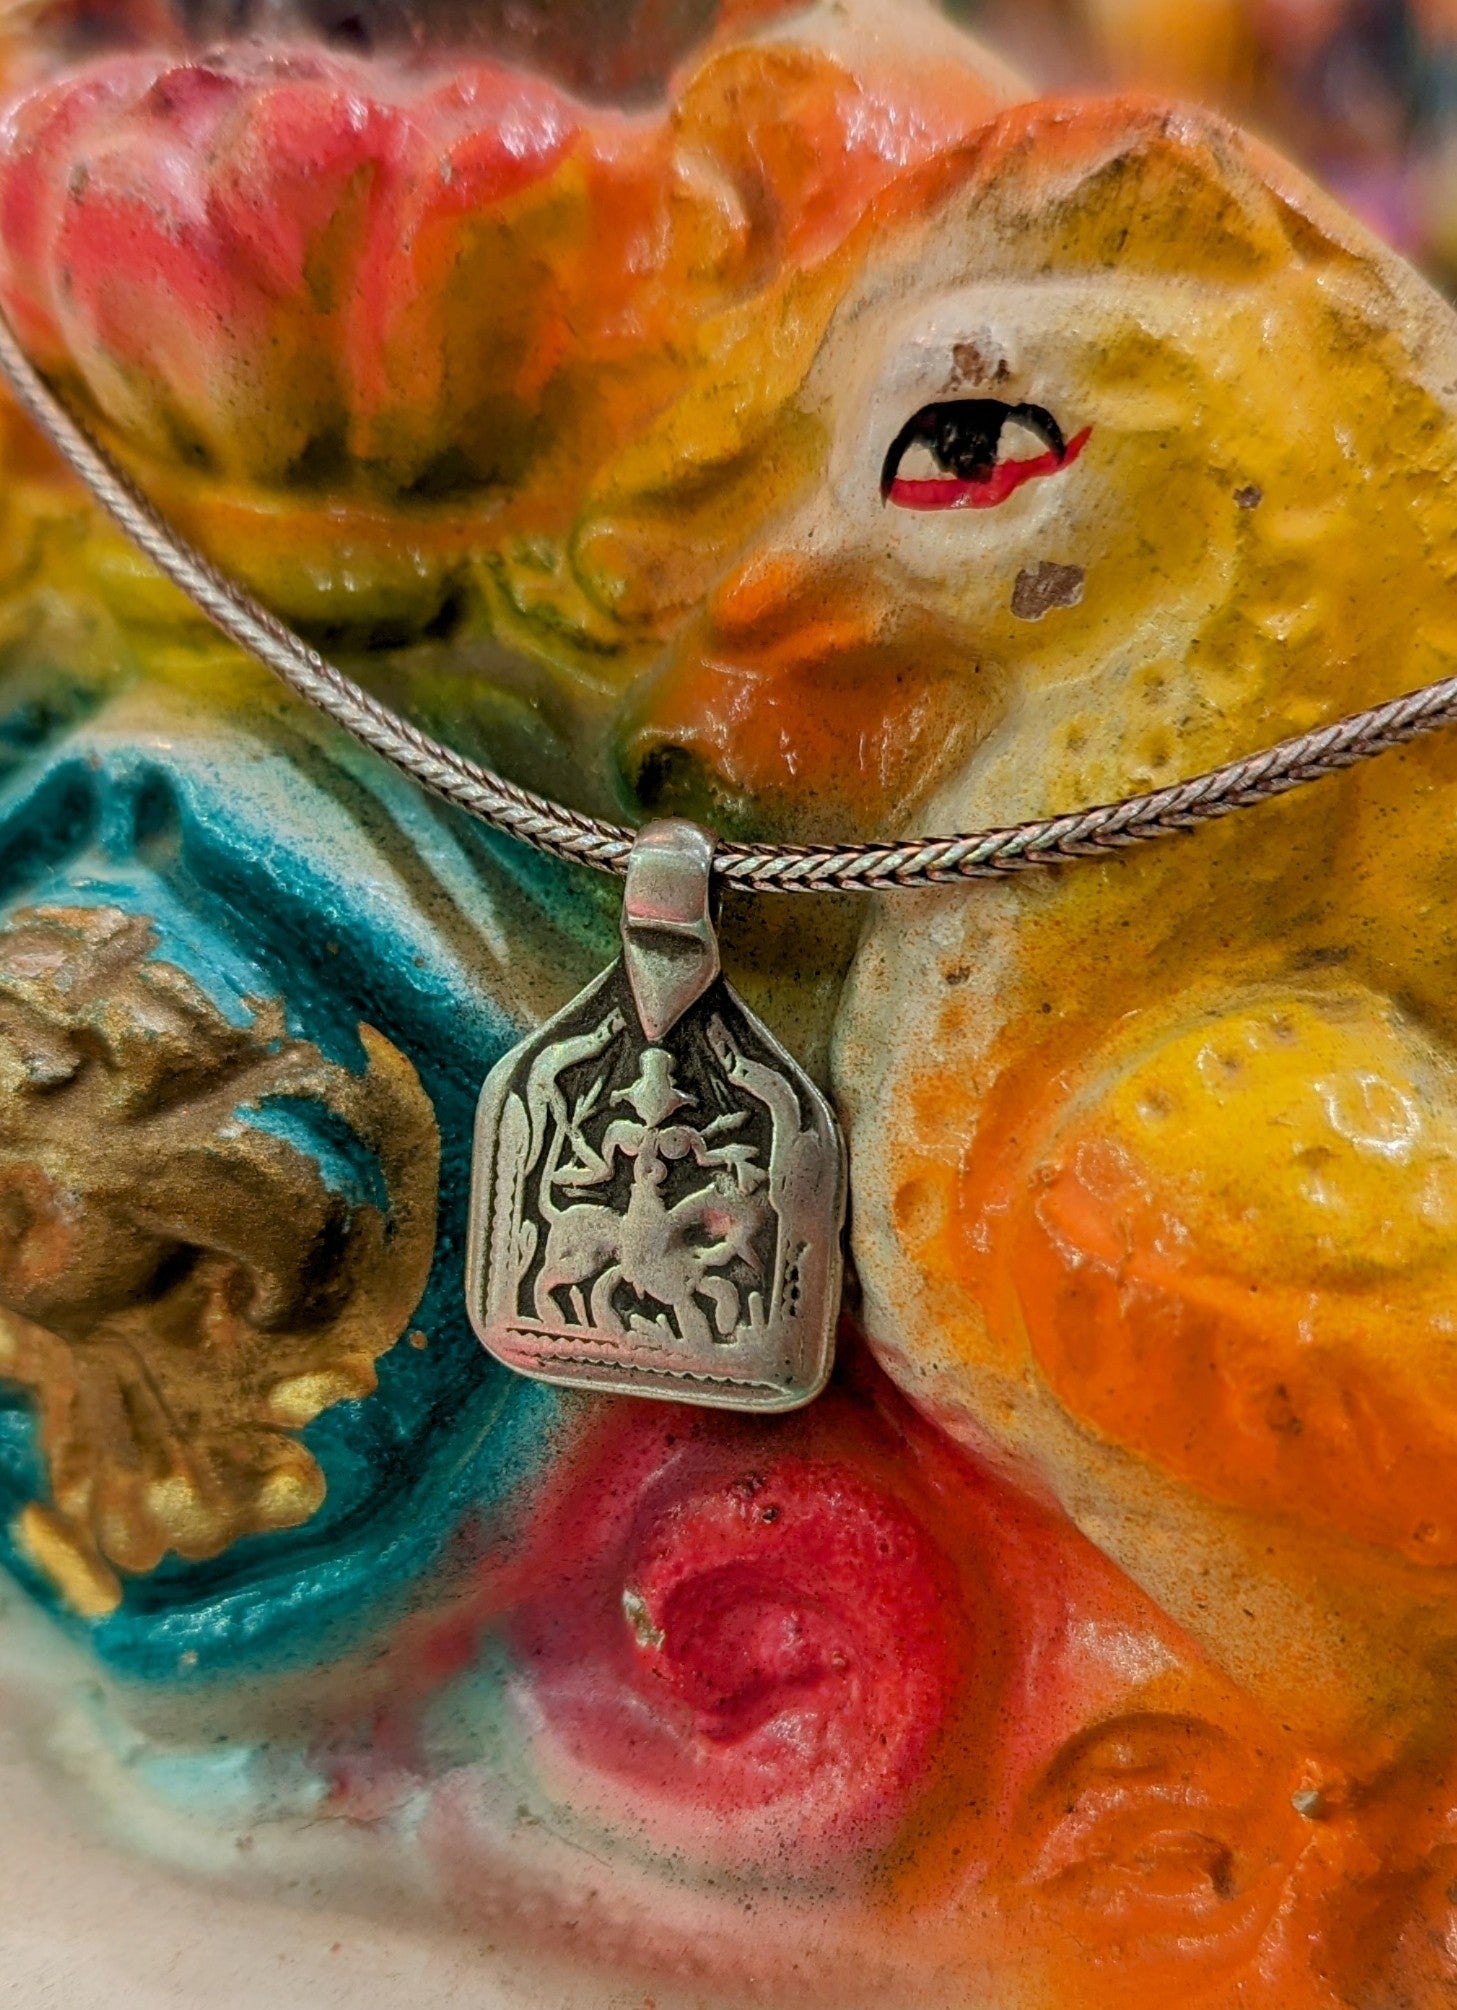 Antique Indian god amulet pendants - Durga